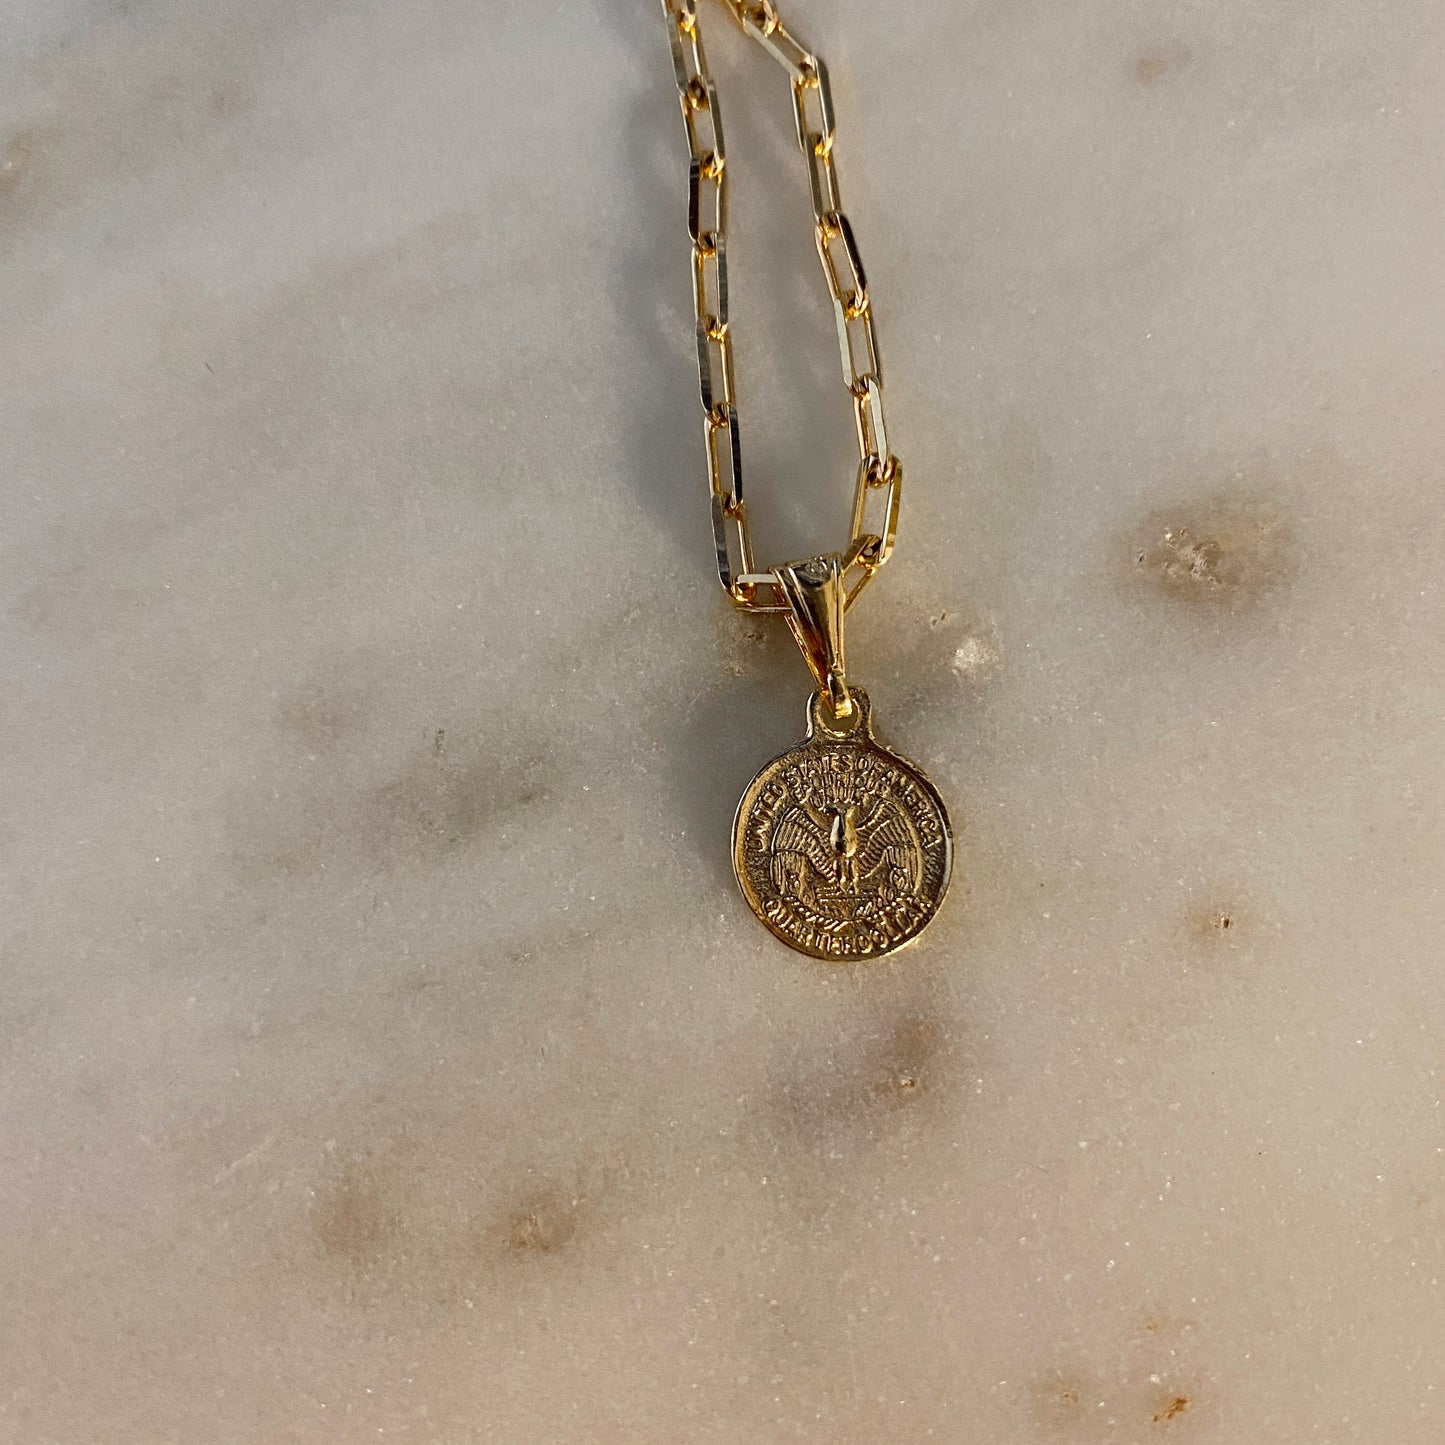 Quarter Charm Necklace